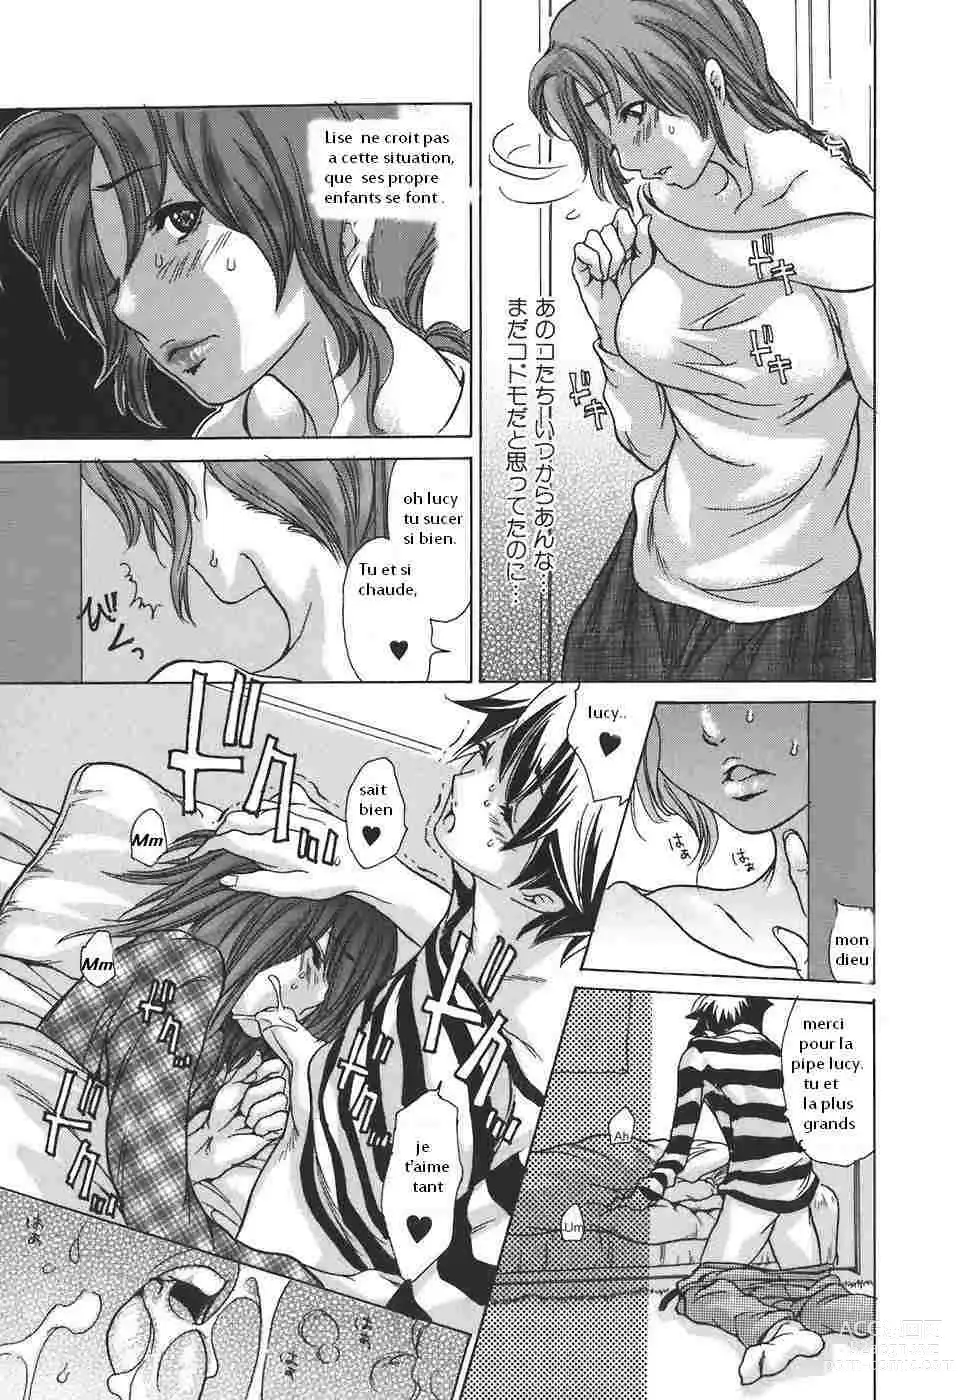 Page 5 of manga le chantage a maman